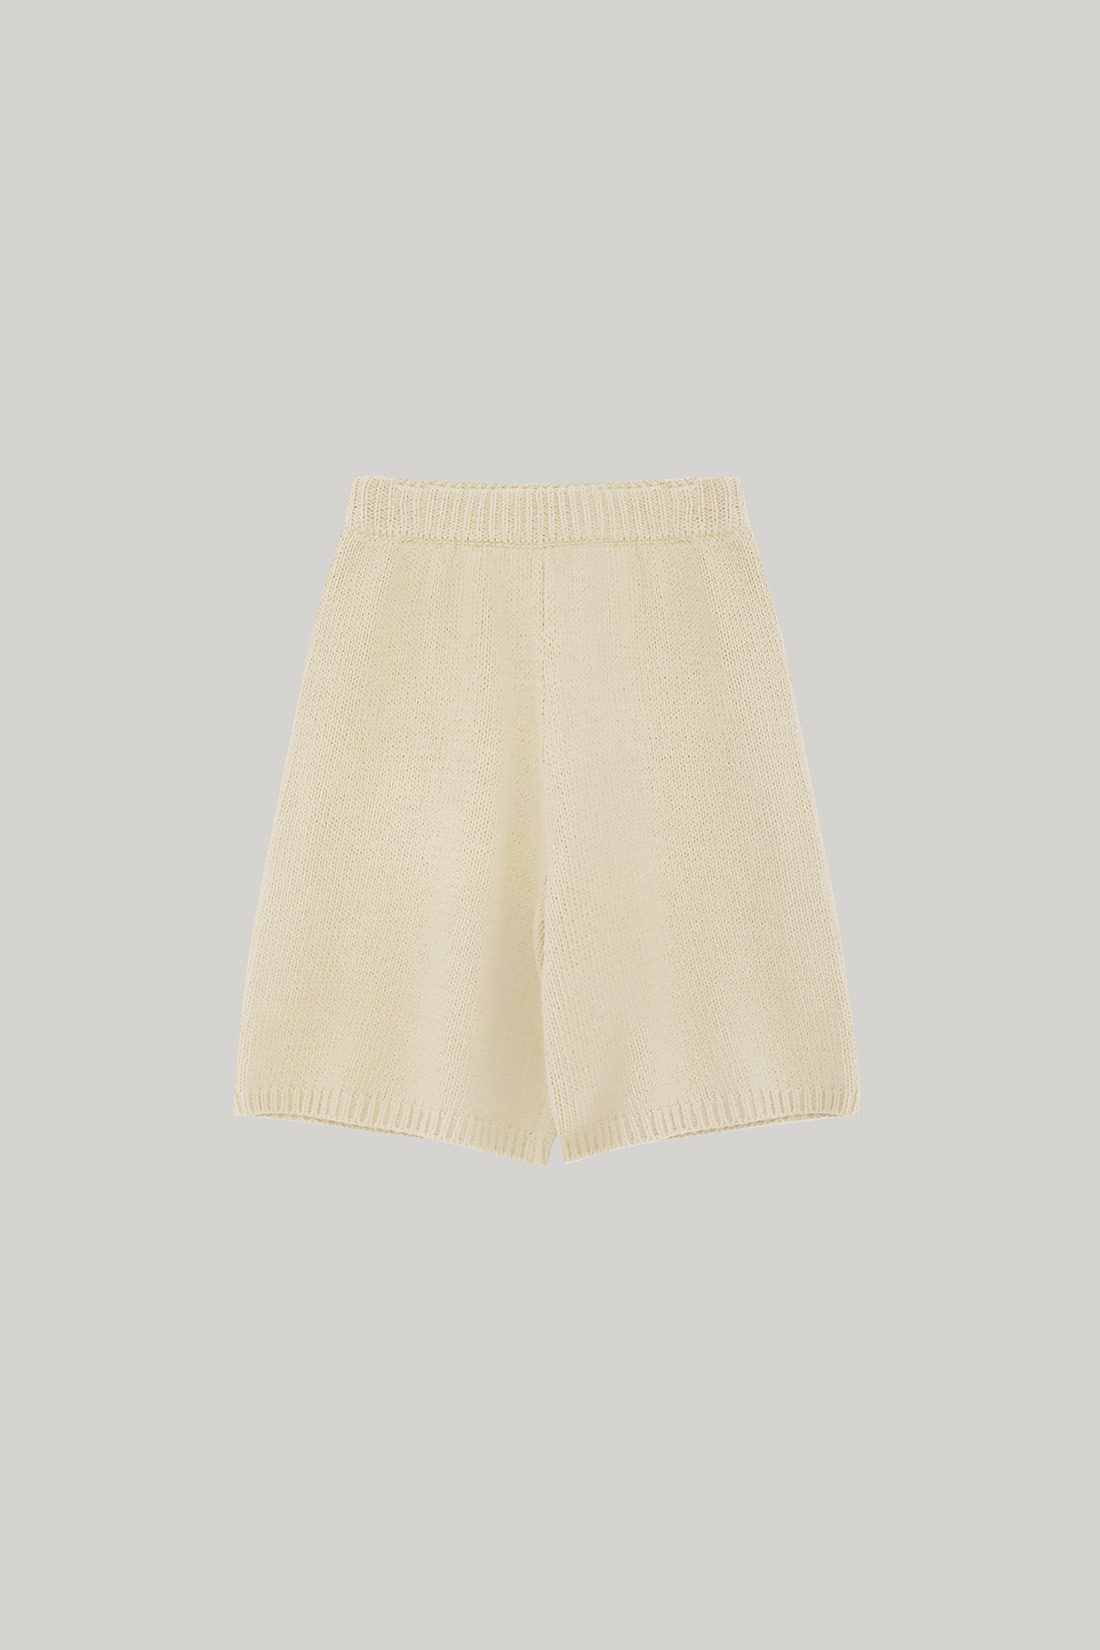 Berman Knit Pants (Cream)